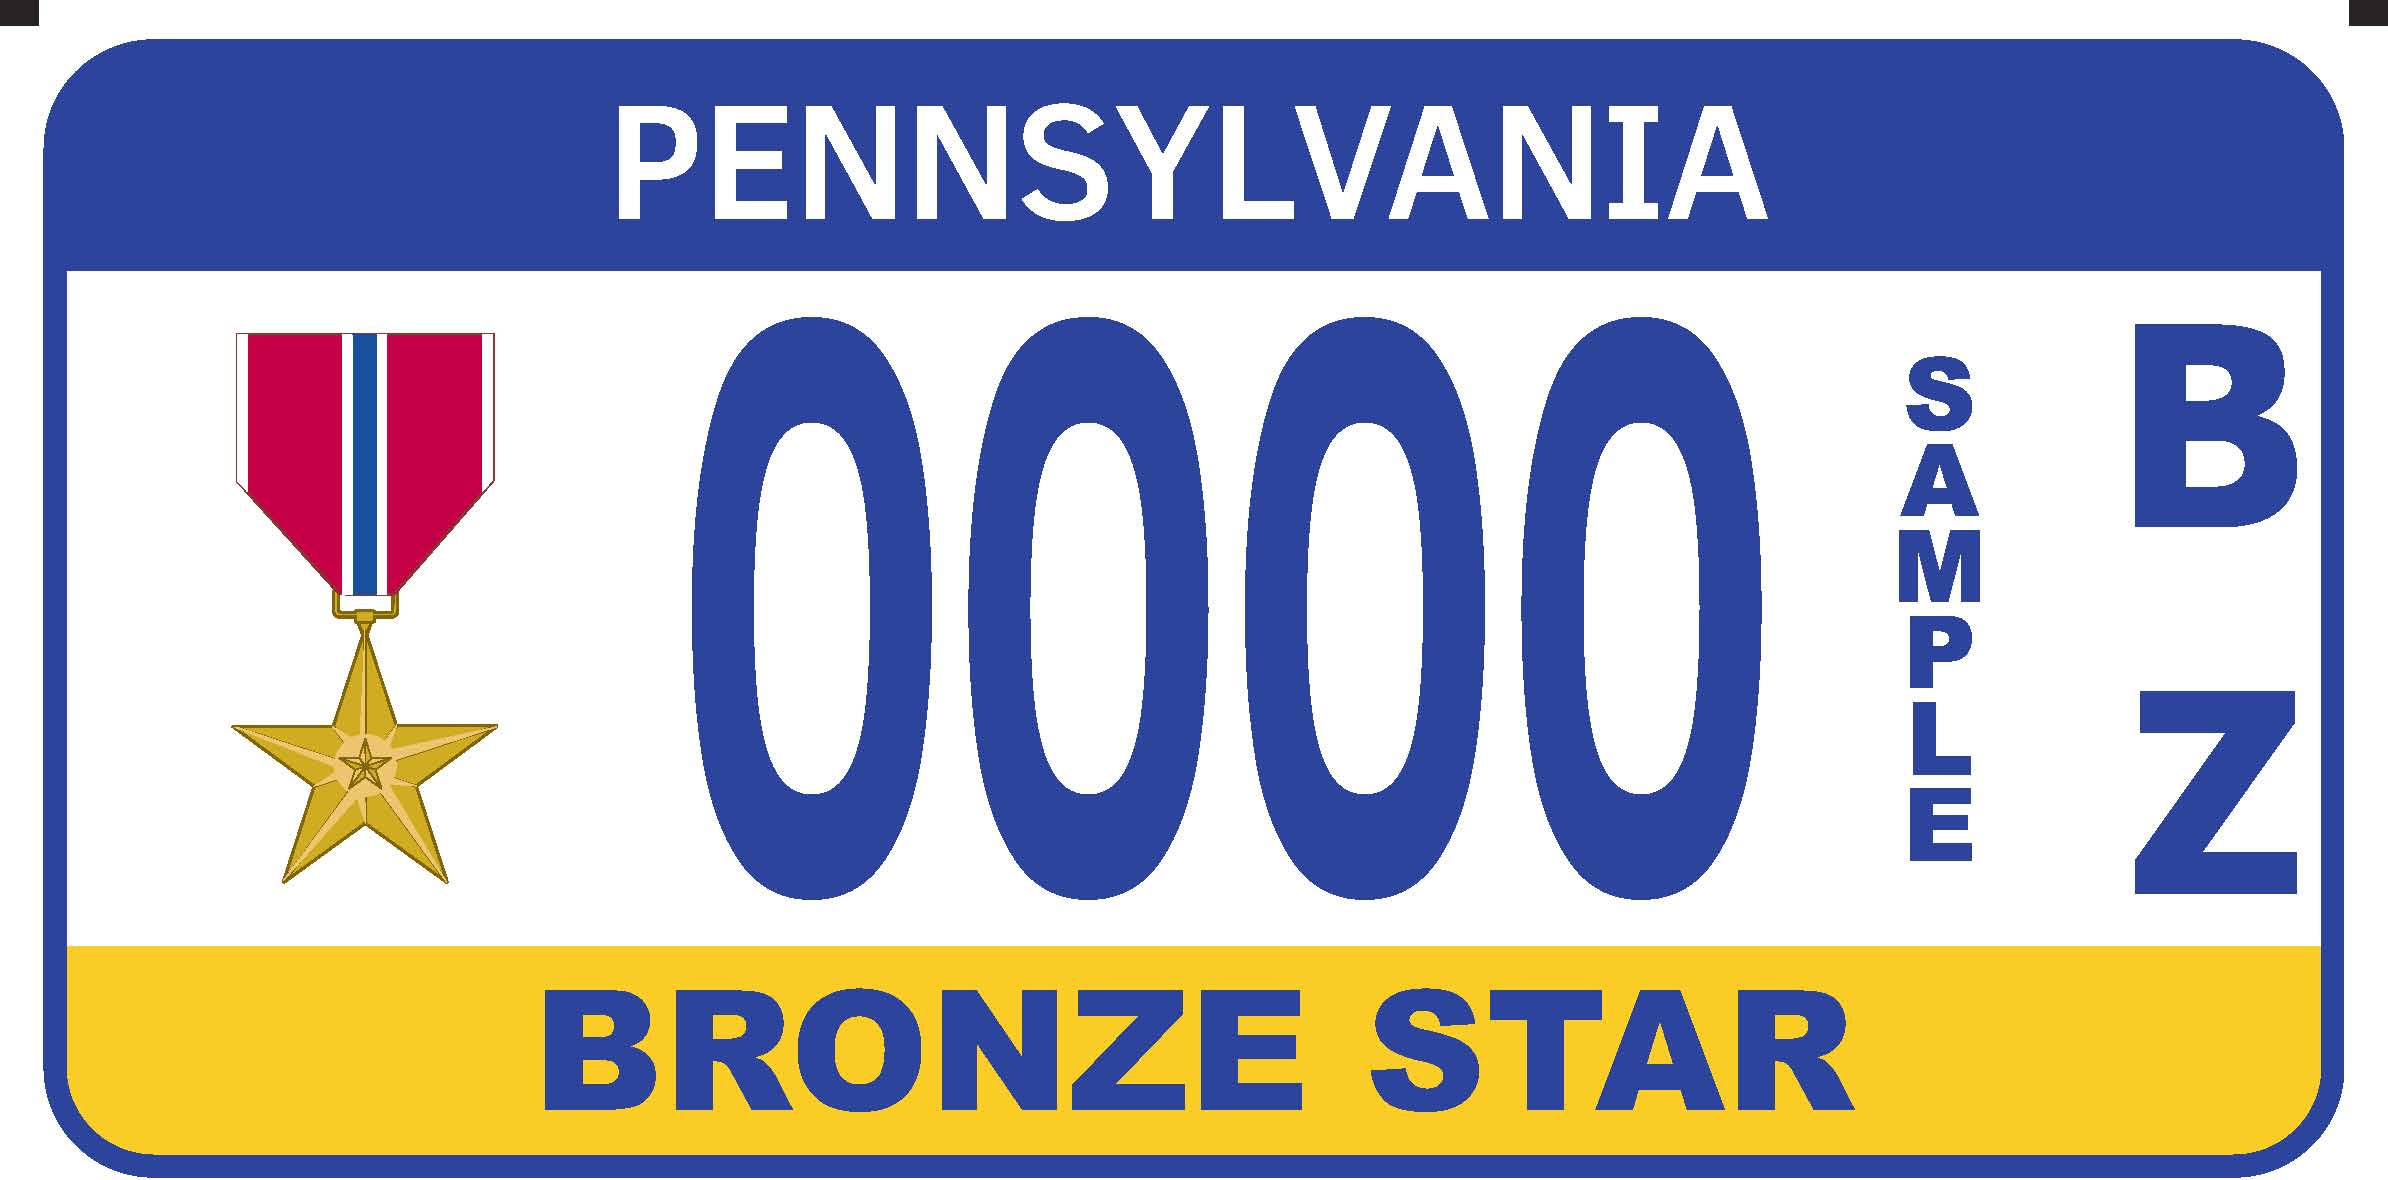 bronze star plate